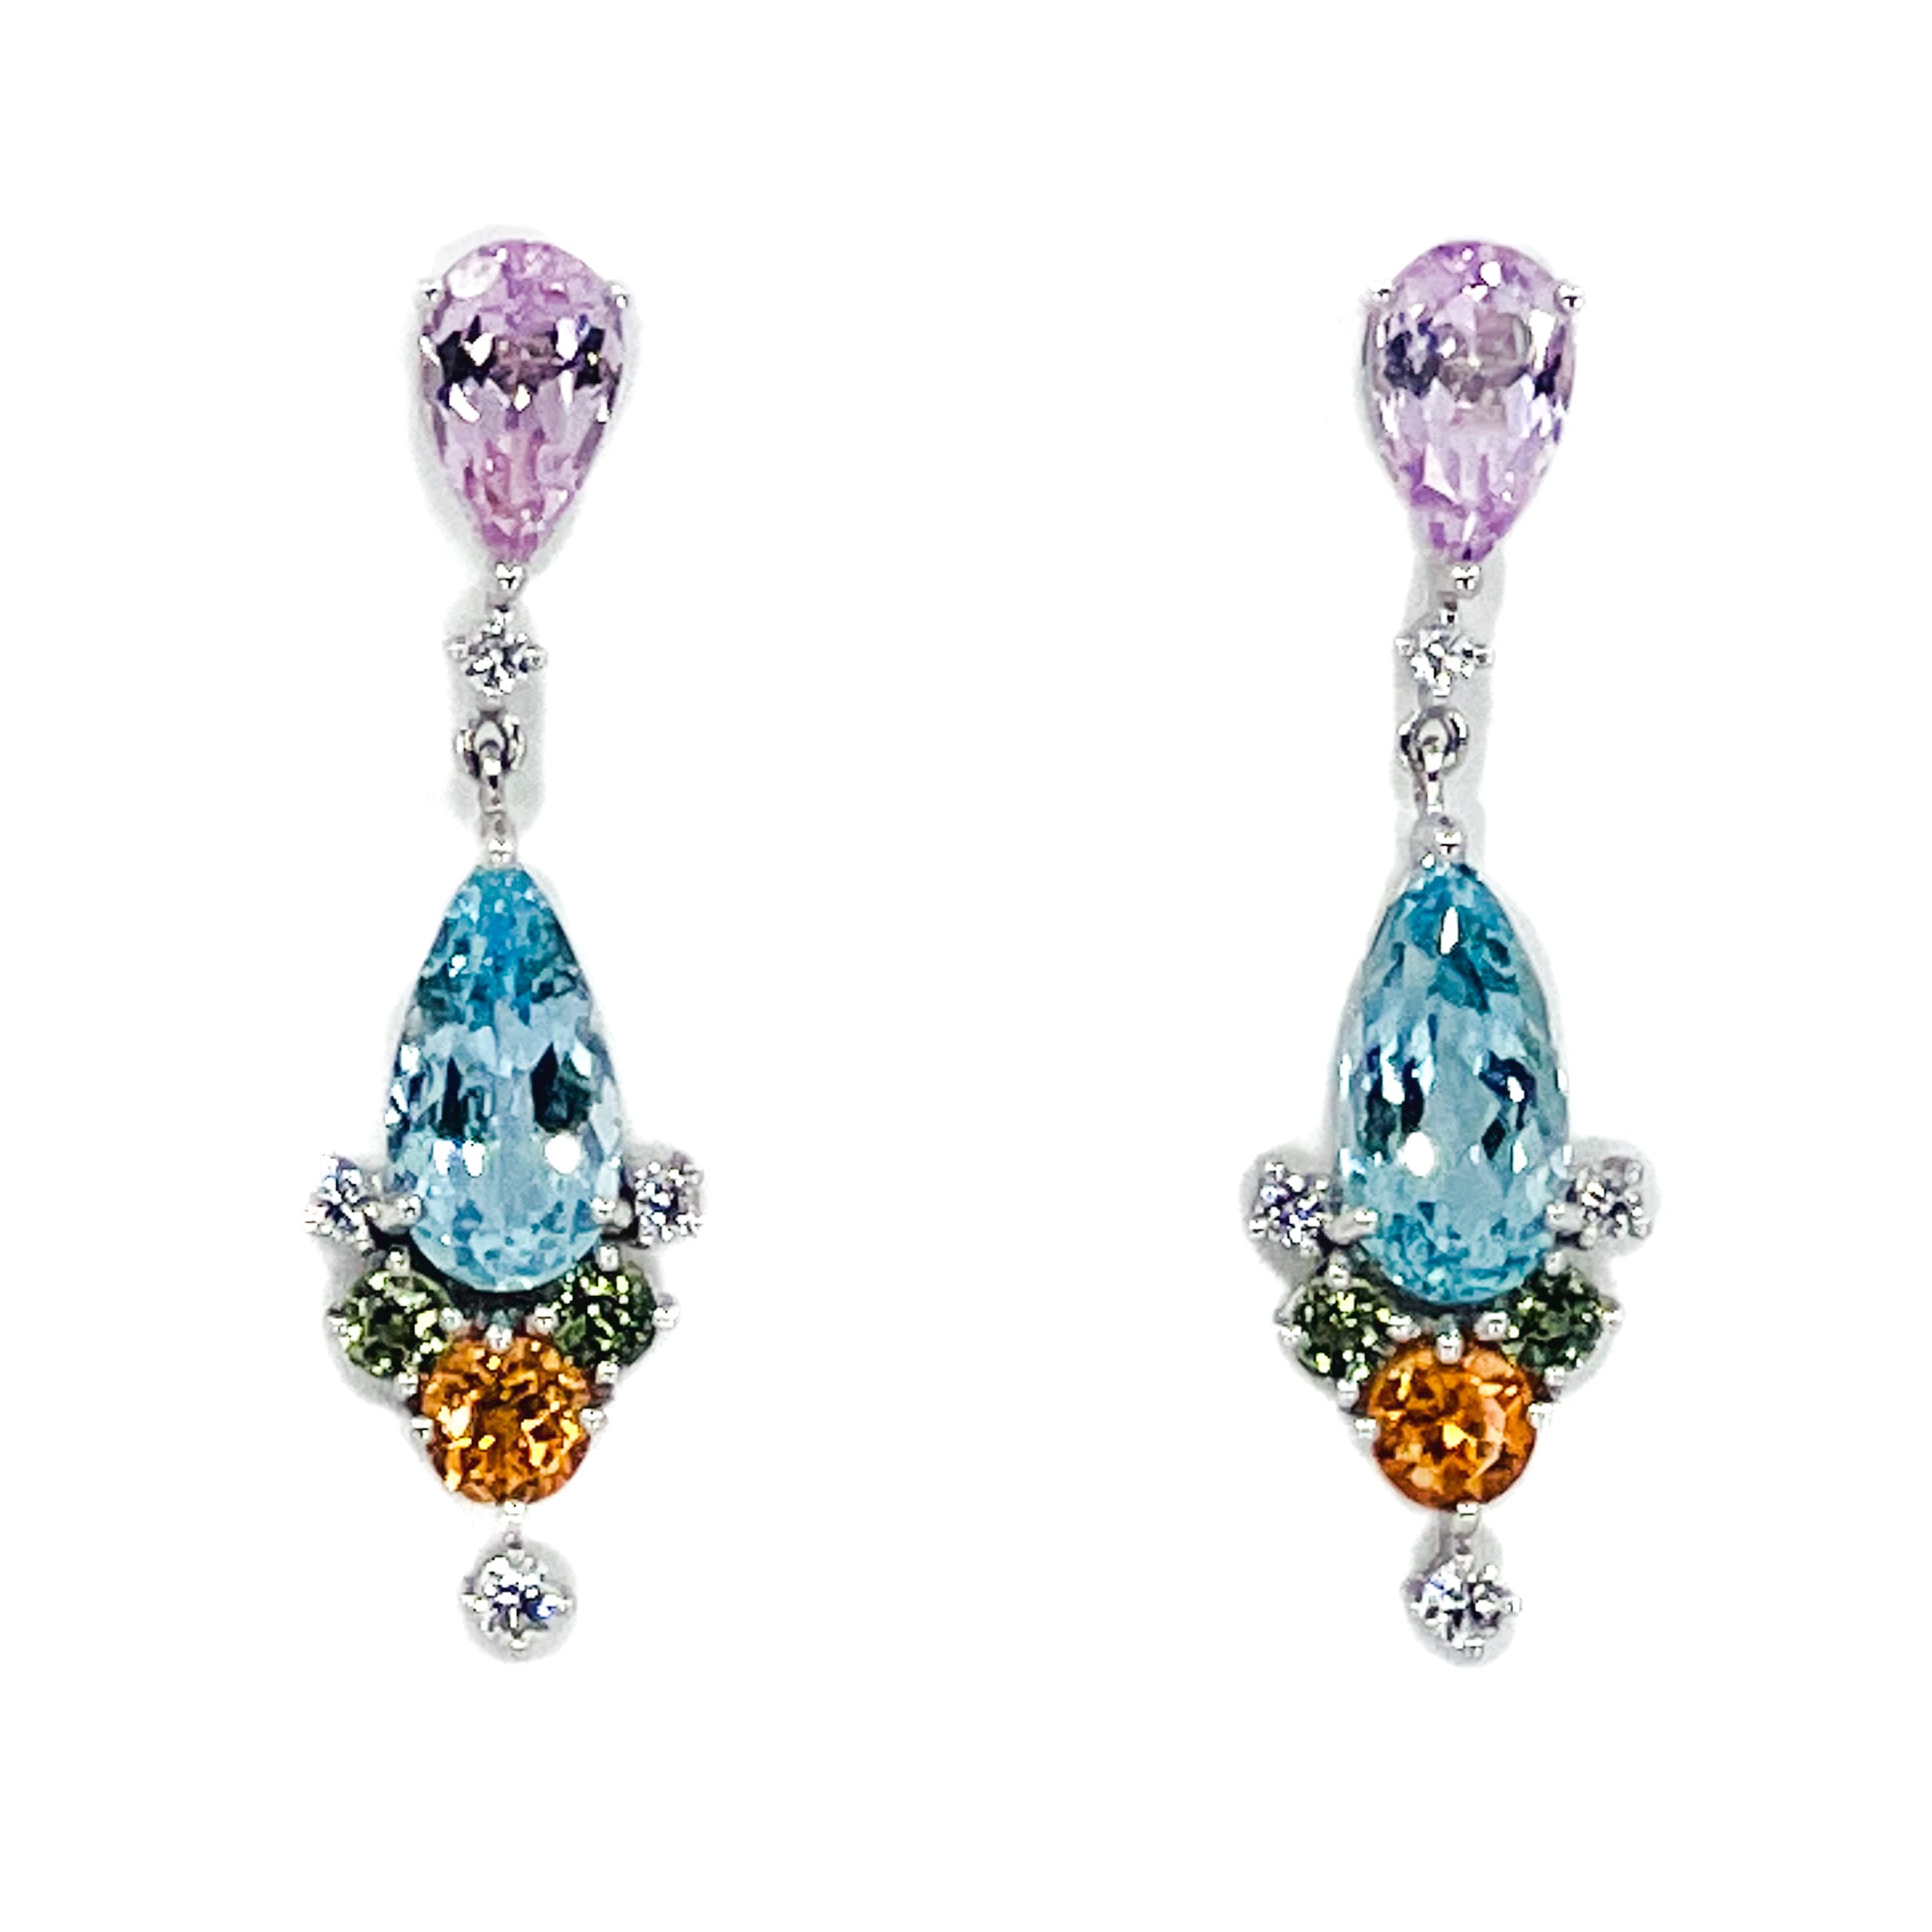 Kunzite, Aquamarine, Tourmaline and Diamond Earrings